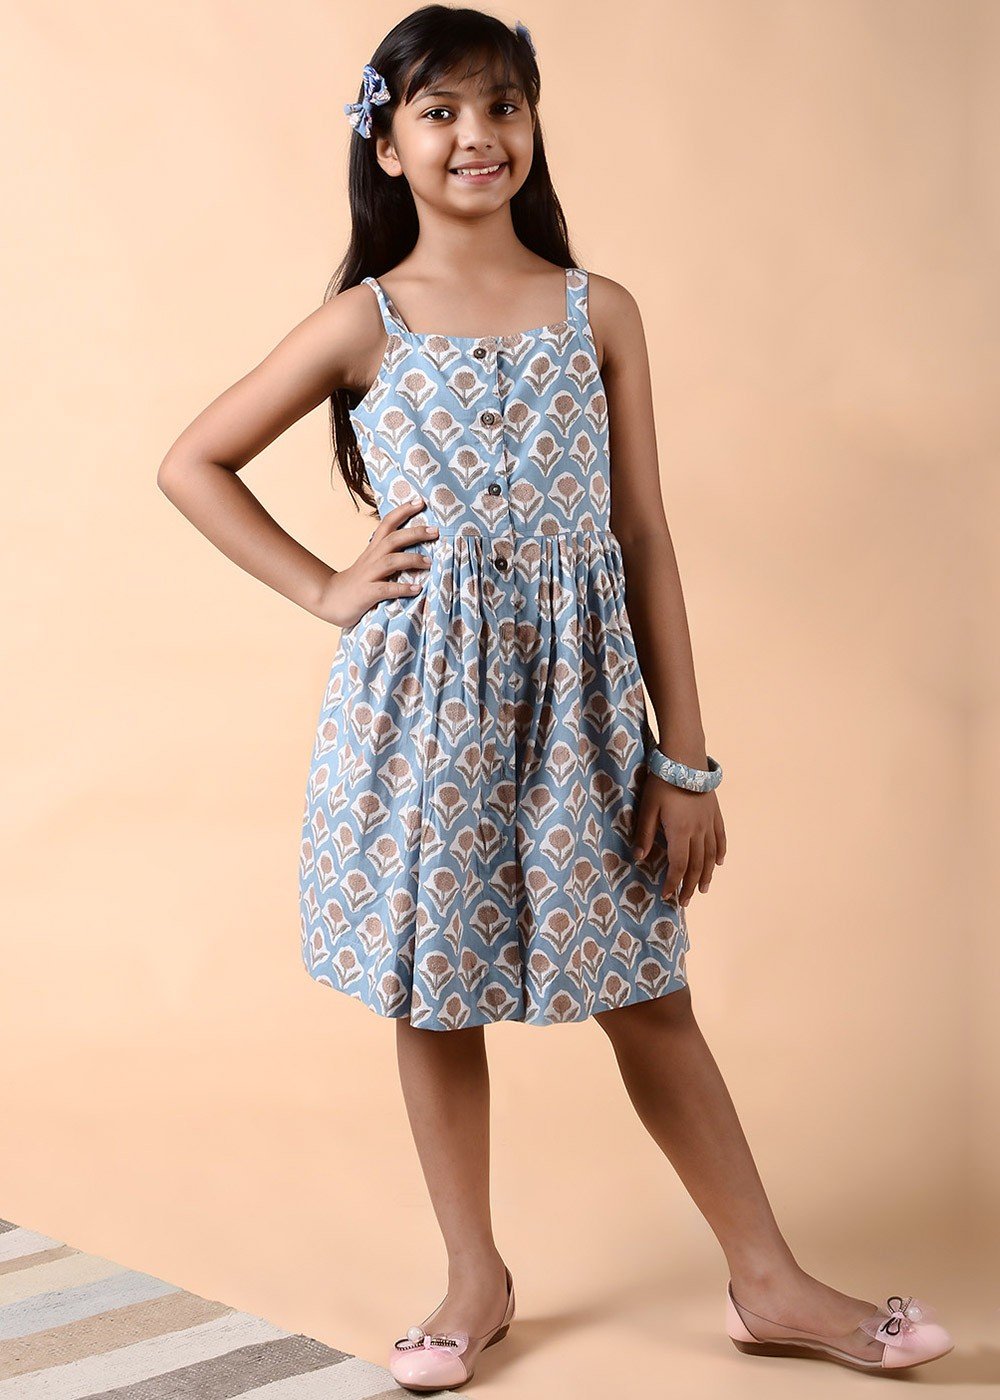 Buy PrinceSasa Birthday Lemon Children Dress Toddler Girl Clothes Girls  Dress,E8,5-6 Years(Size 130) at Amazon.in